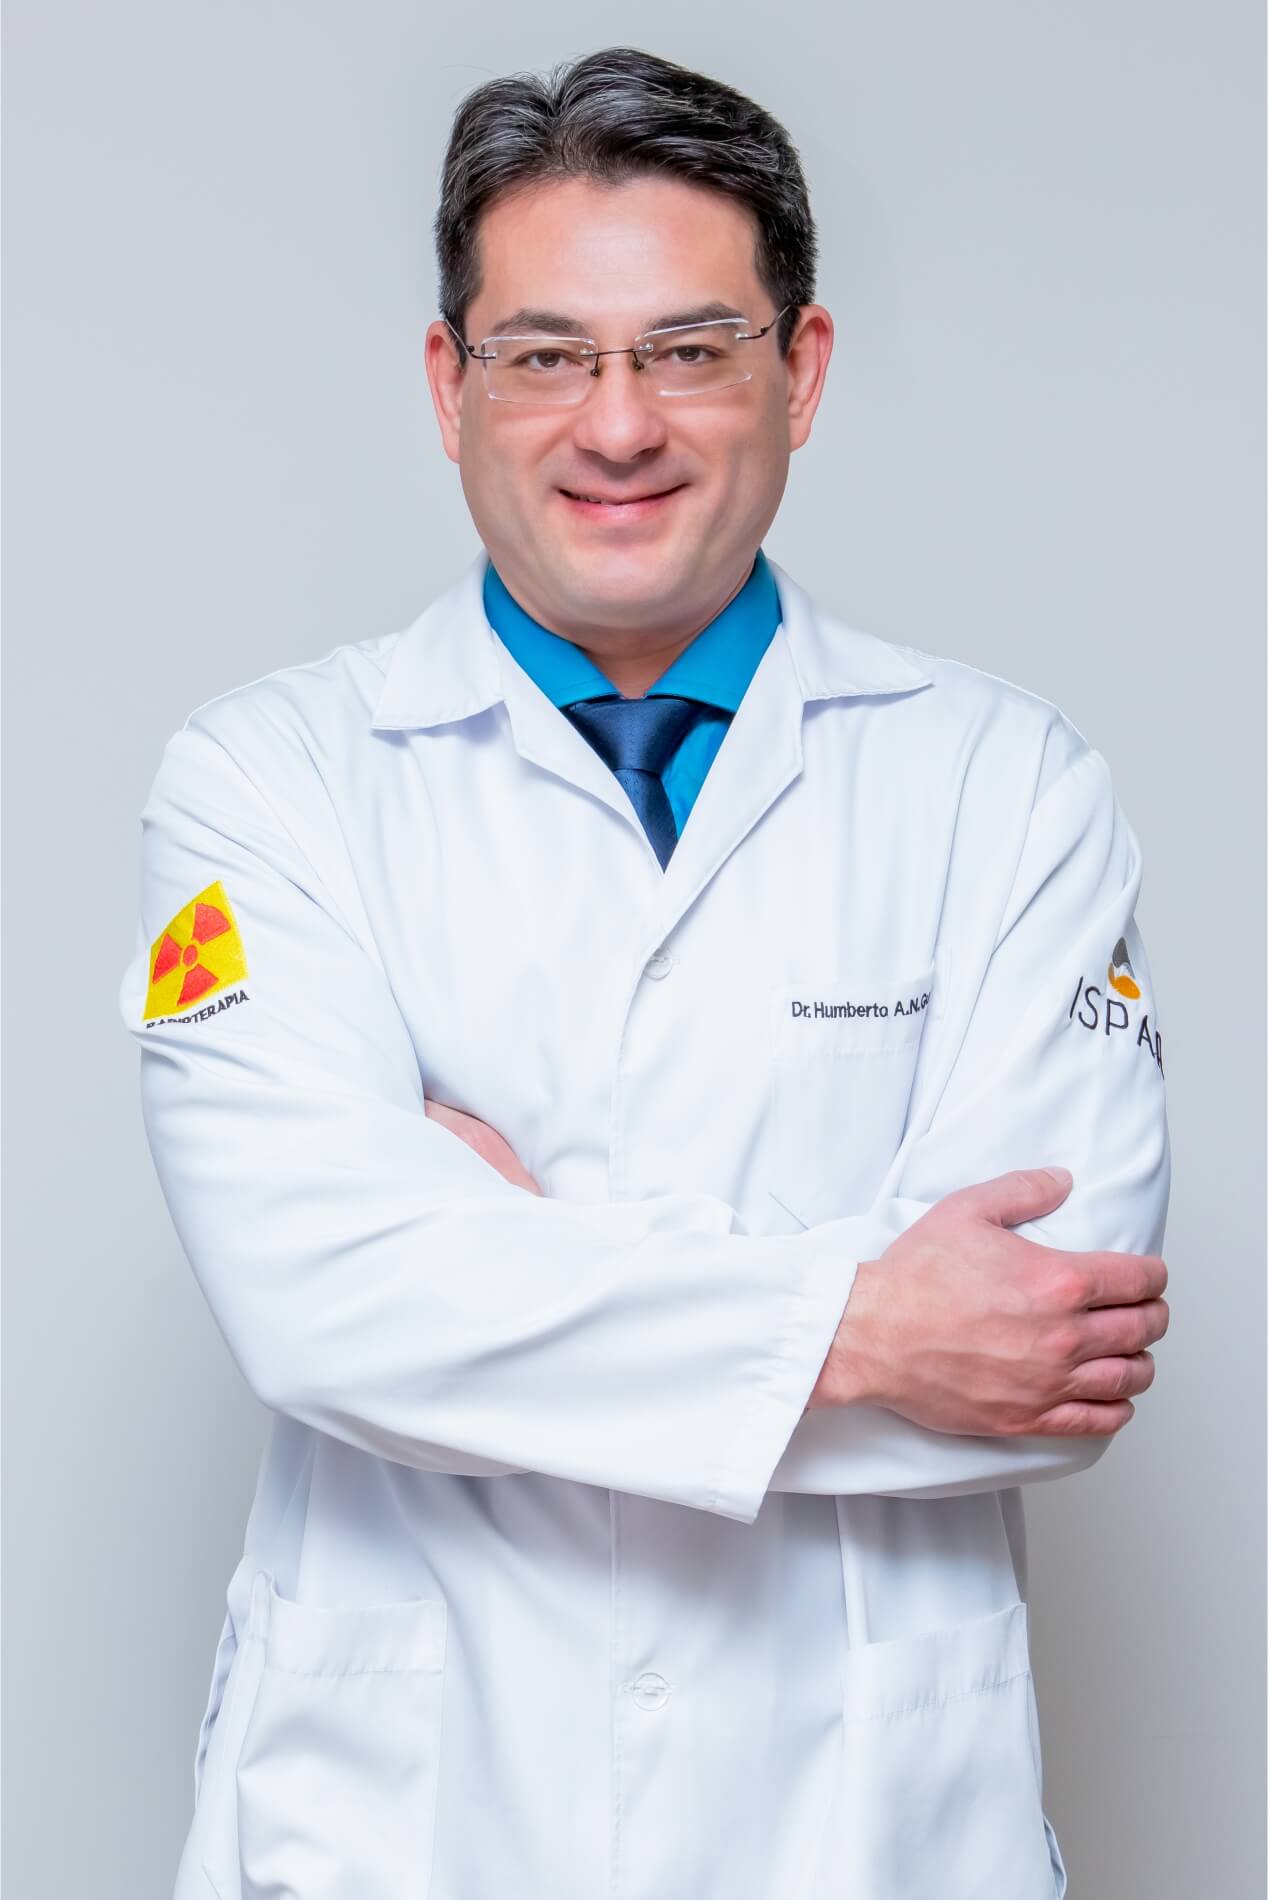 Dr. Humberto A. Nakamura Guerzoni